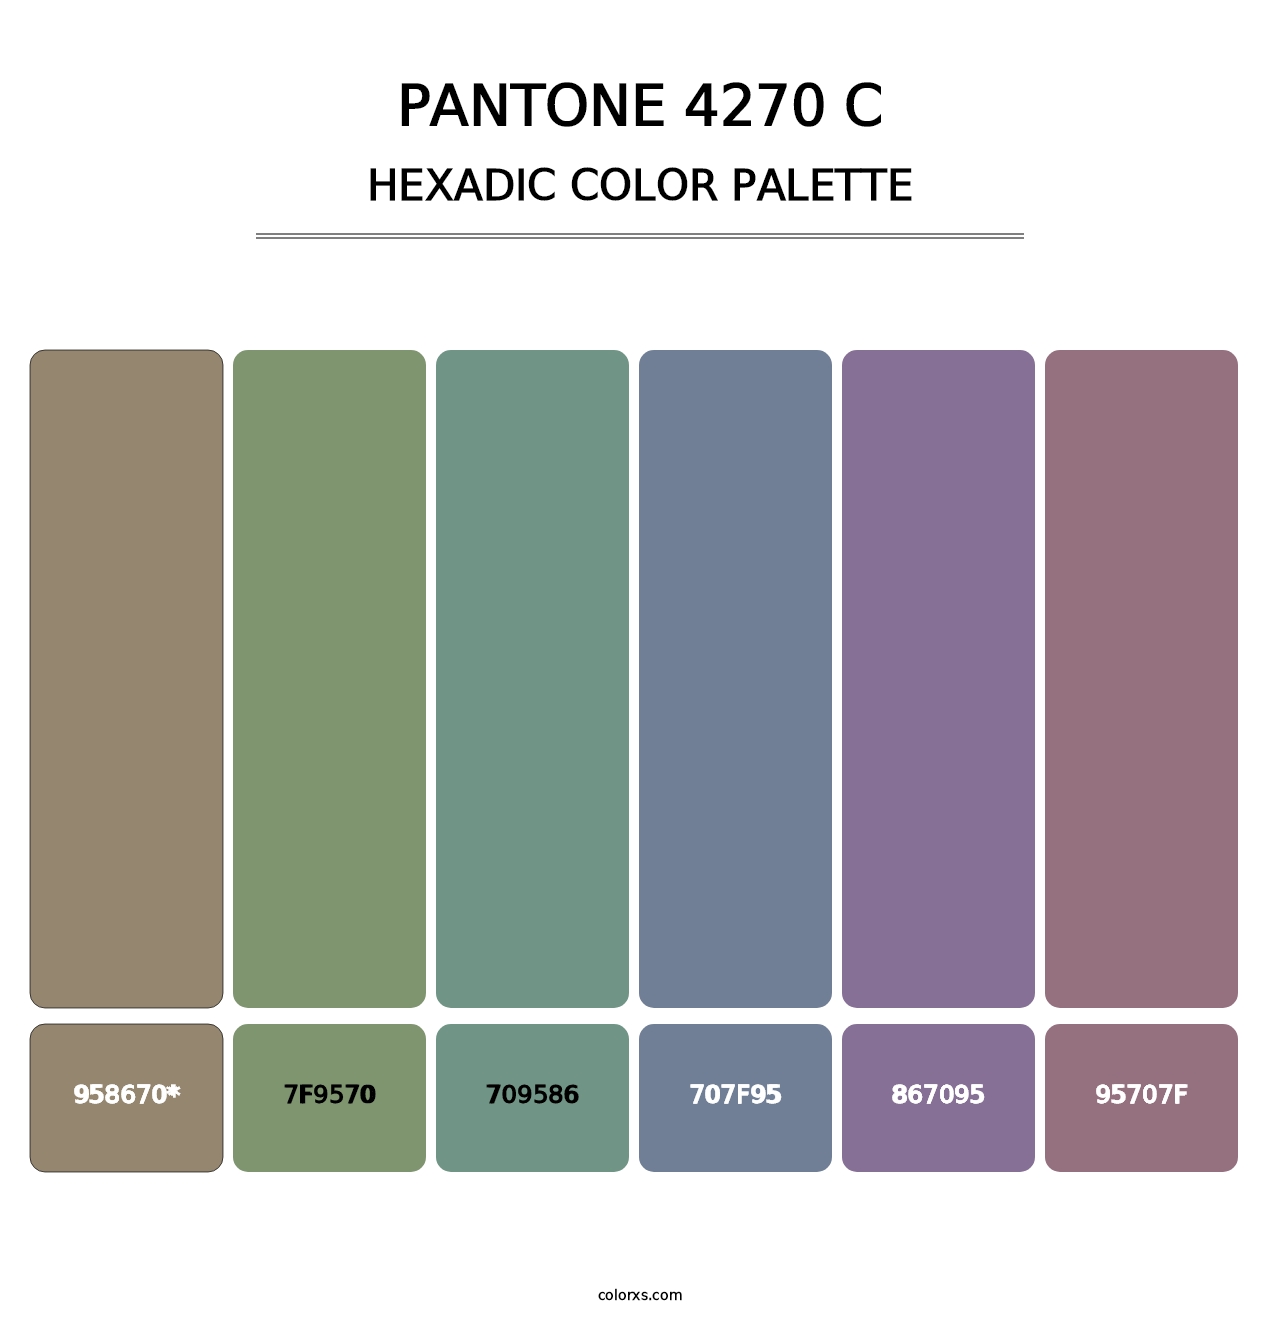 PANTONE 4270 C - Hexadic Color Palette